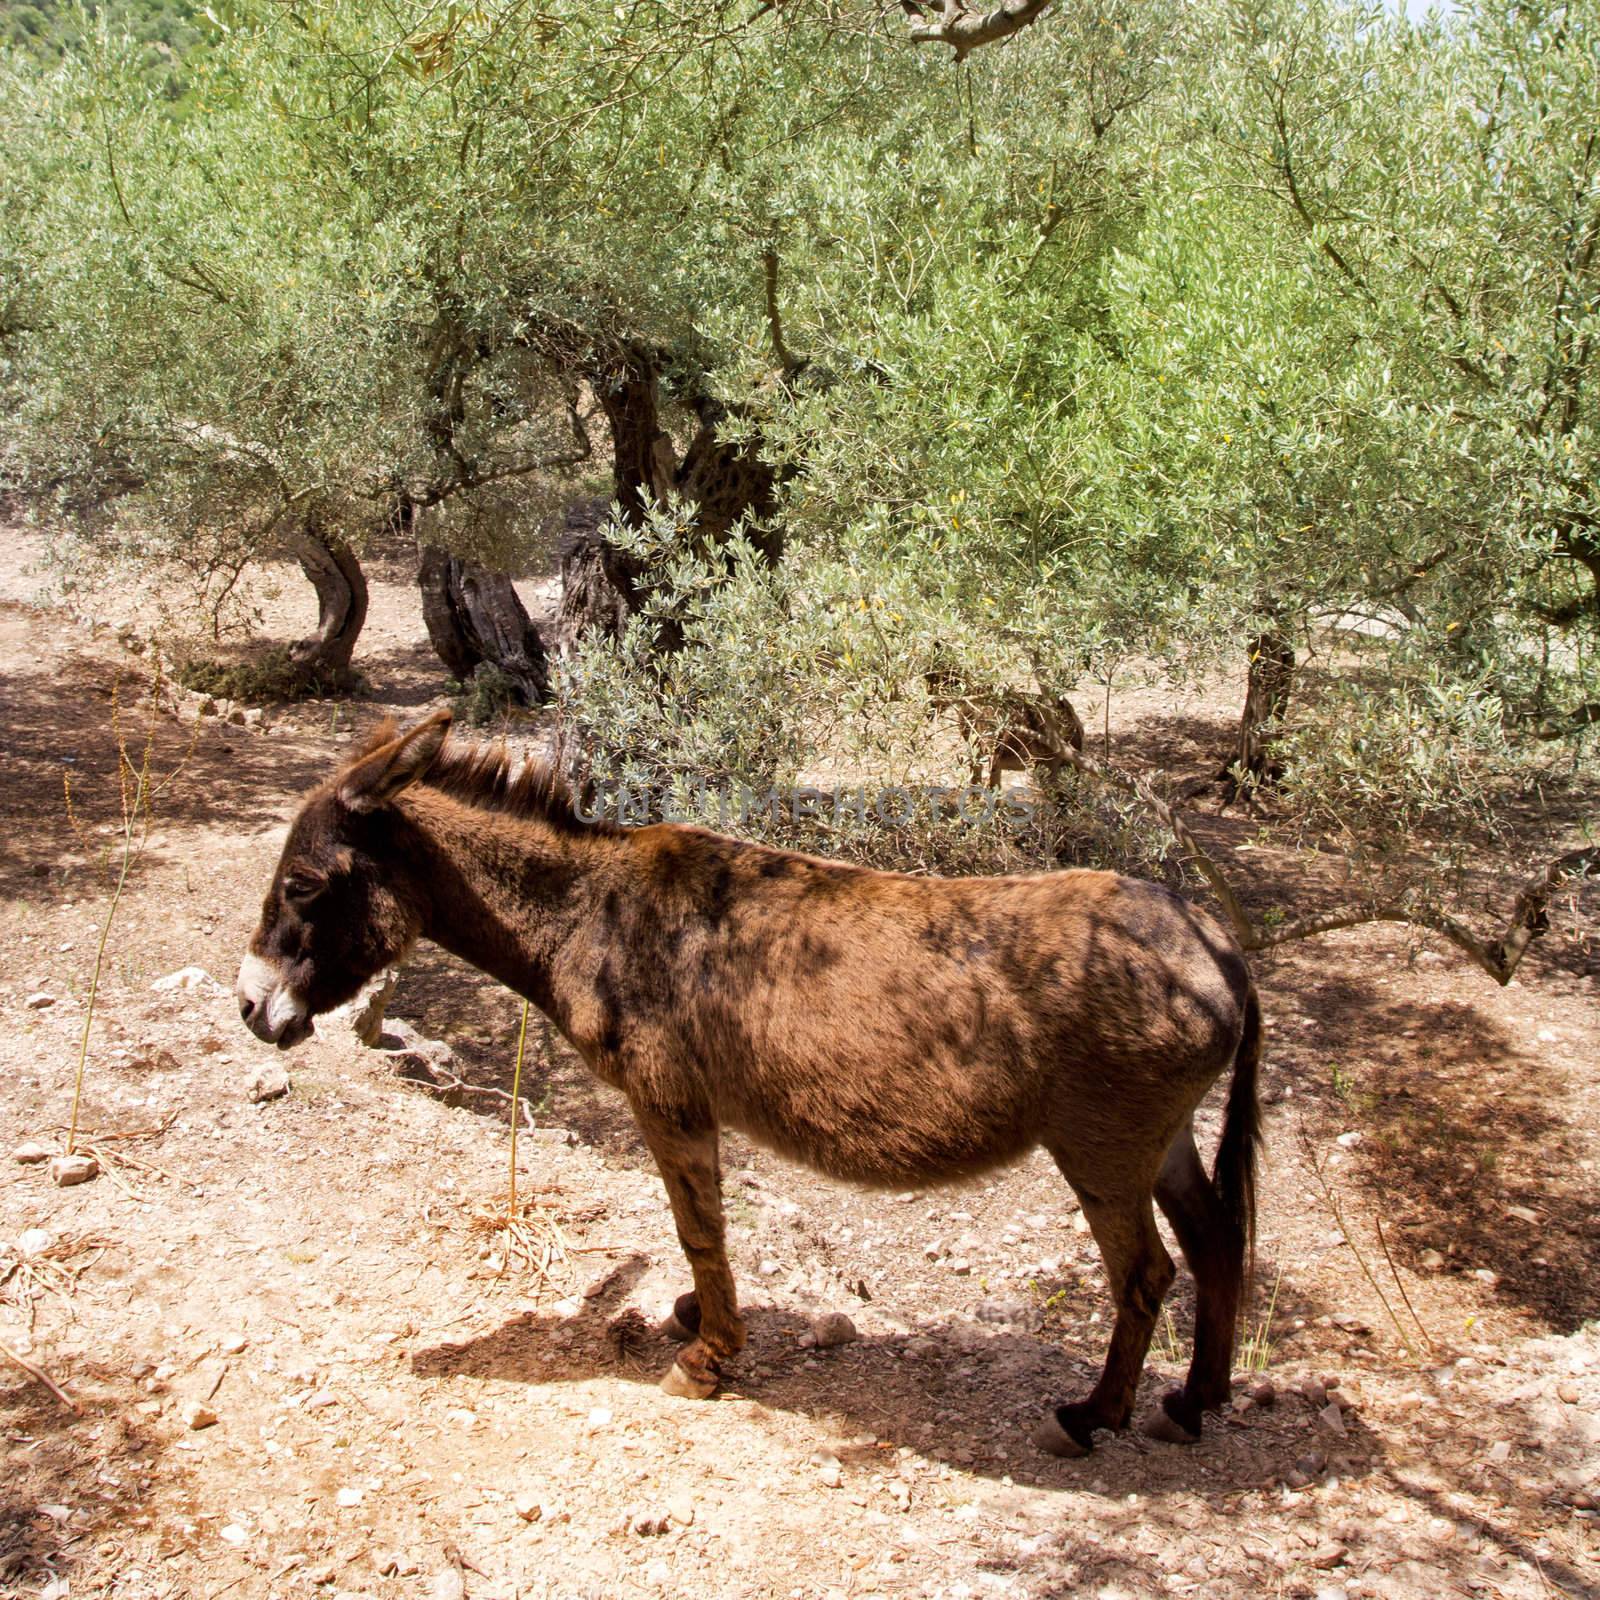 Donkey mule in s mediterranean olive tree field of Majorca Spain